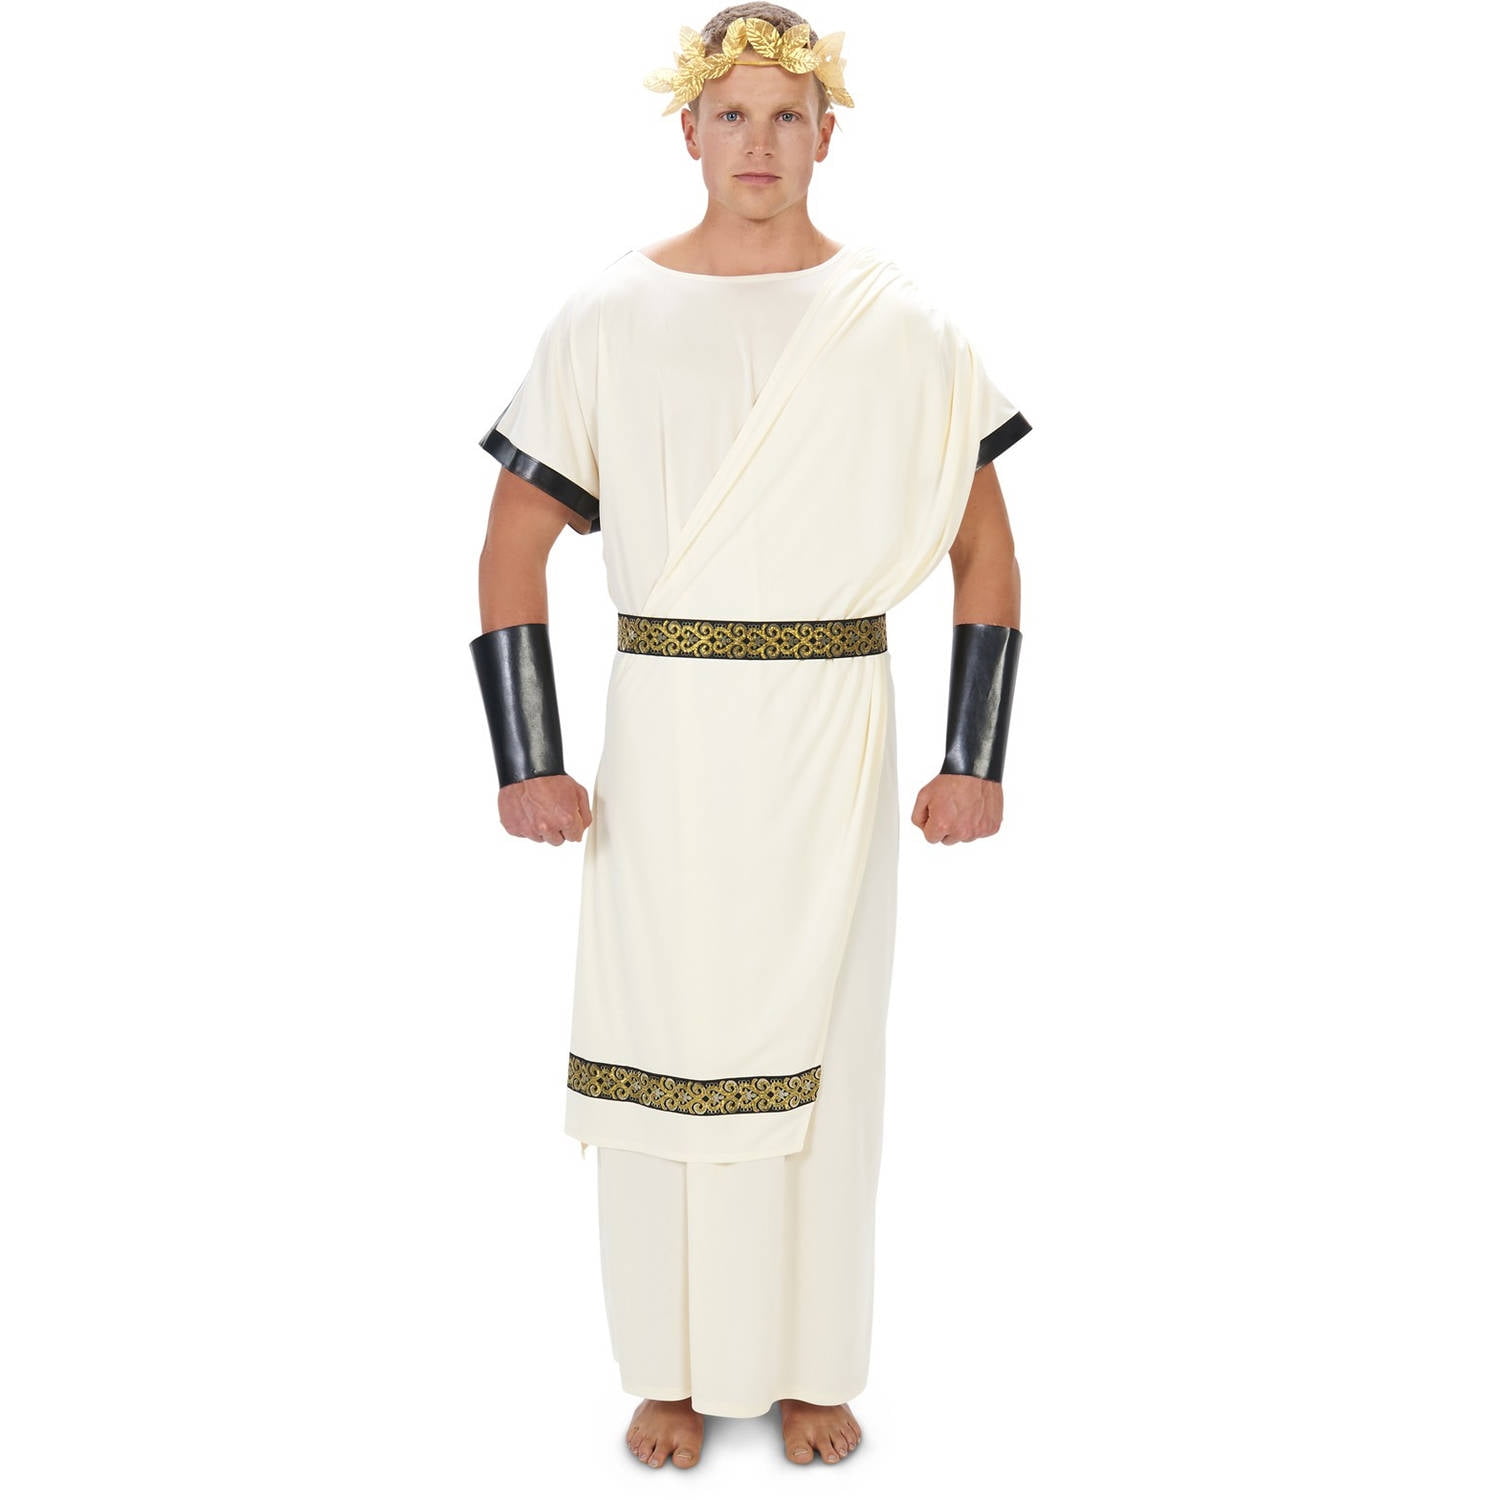 Caesar's Long Toga Men's Adult Halloween Costume - Walmart.com